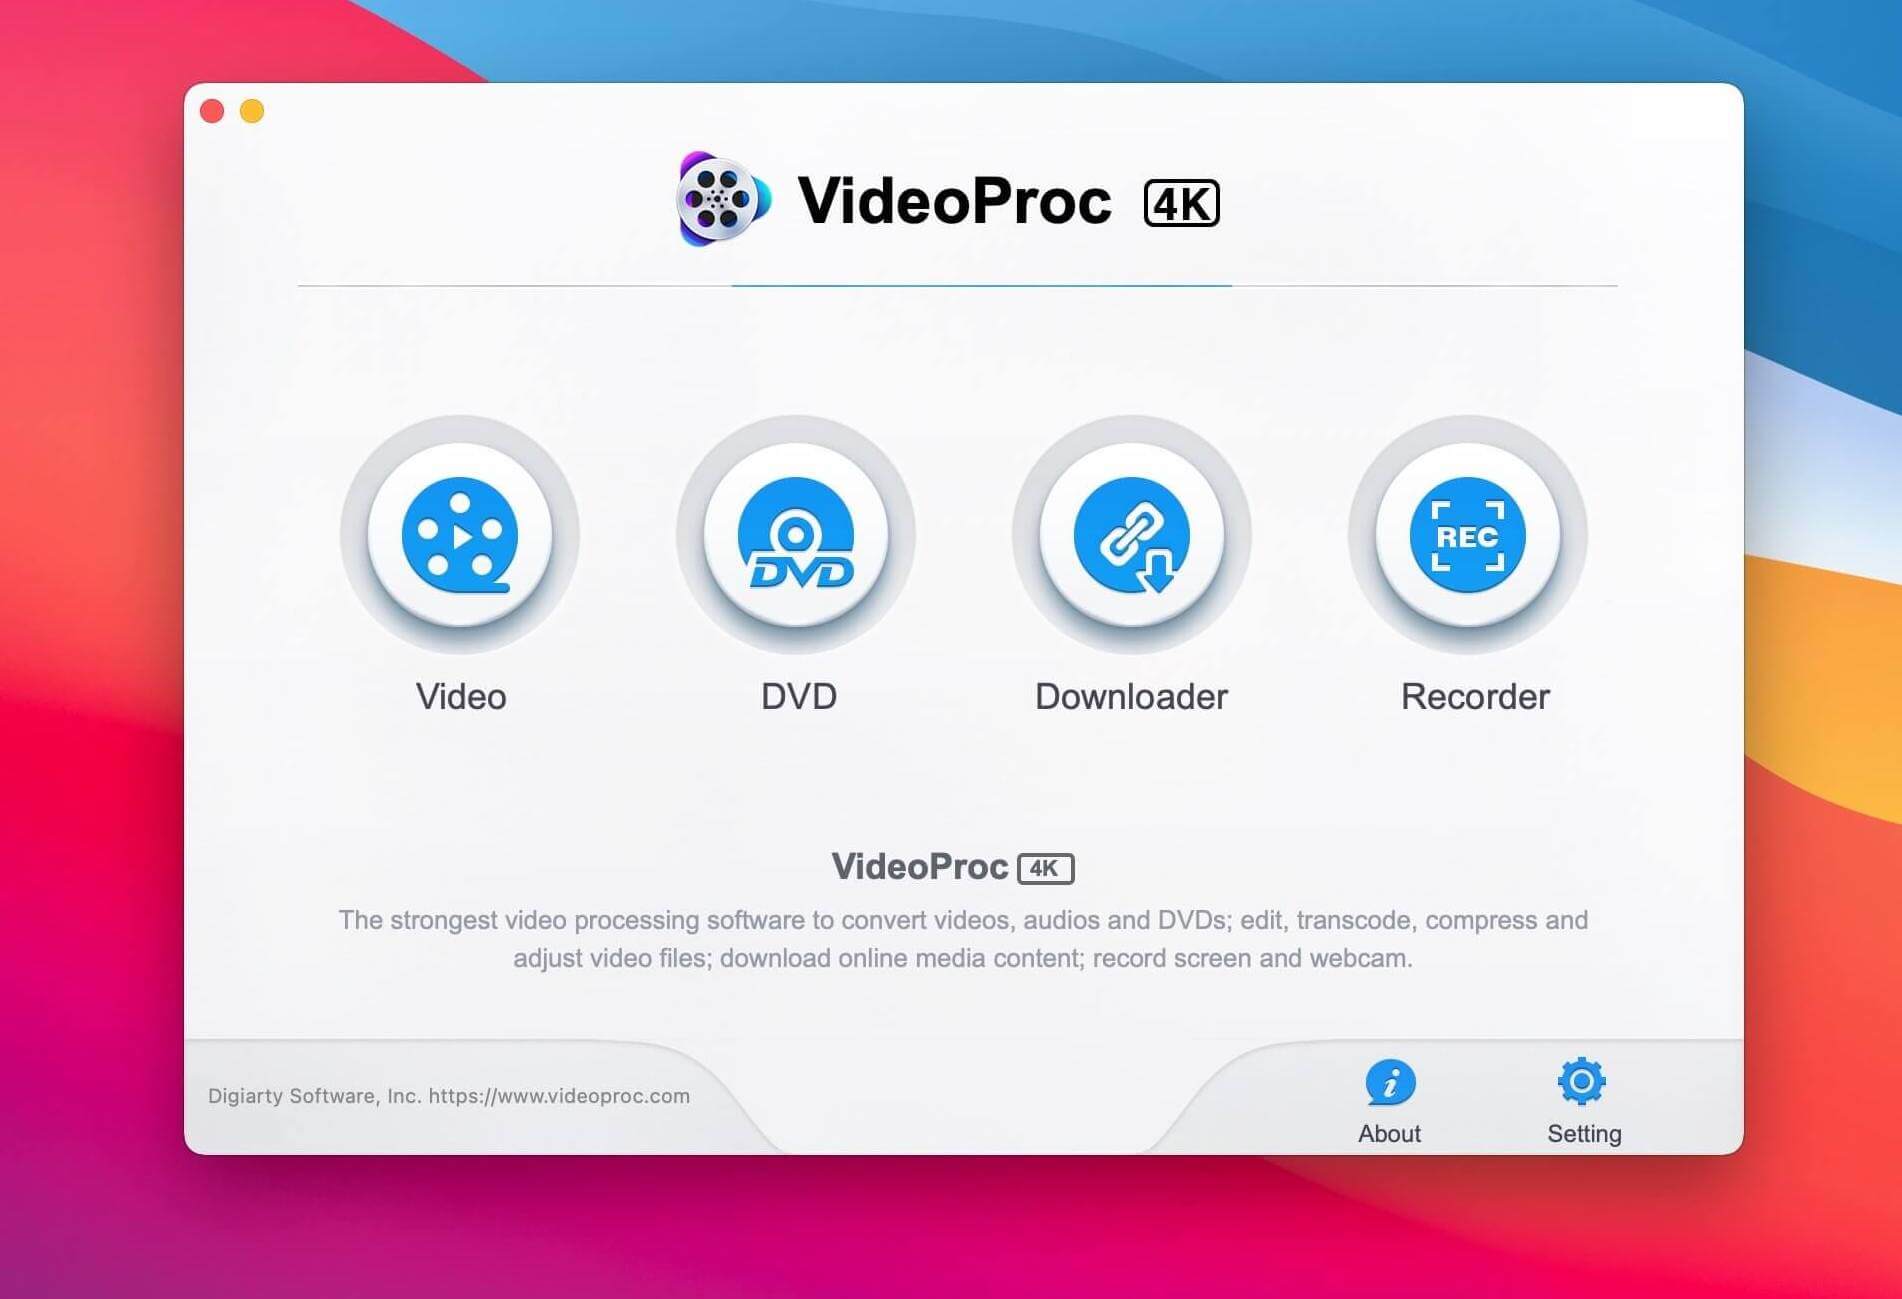 VideoProc Converter 5.6 downloading